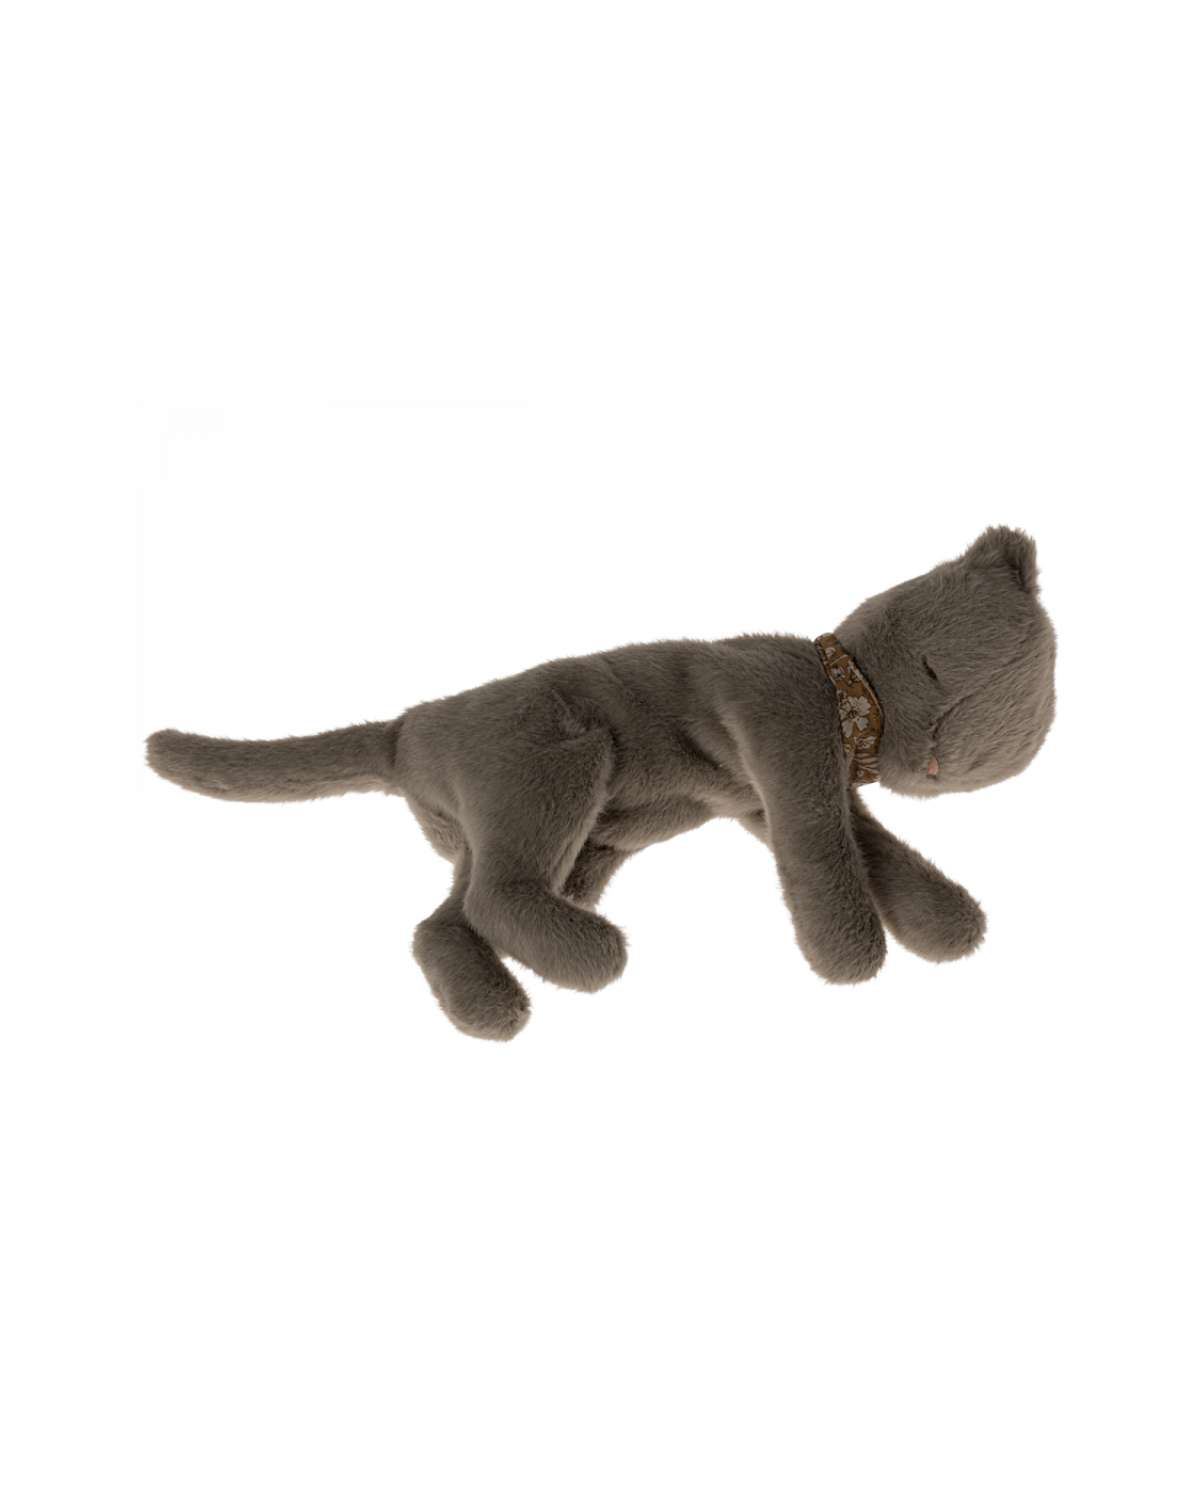 Maileg Kitten Plush - Earth Grey: Cute Toy